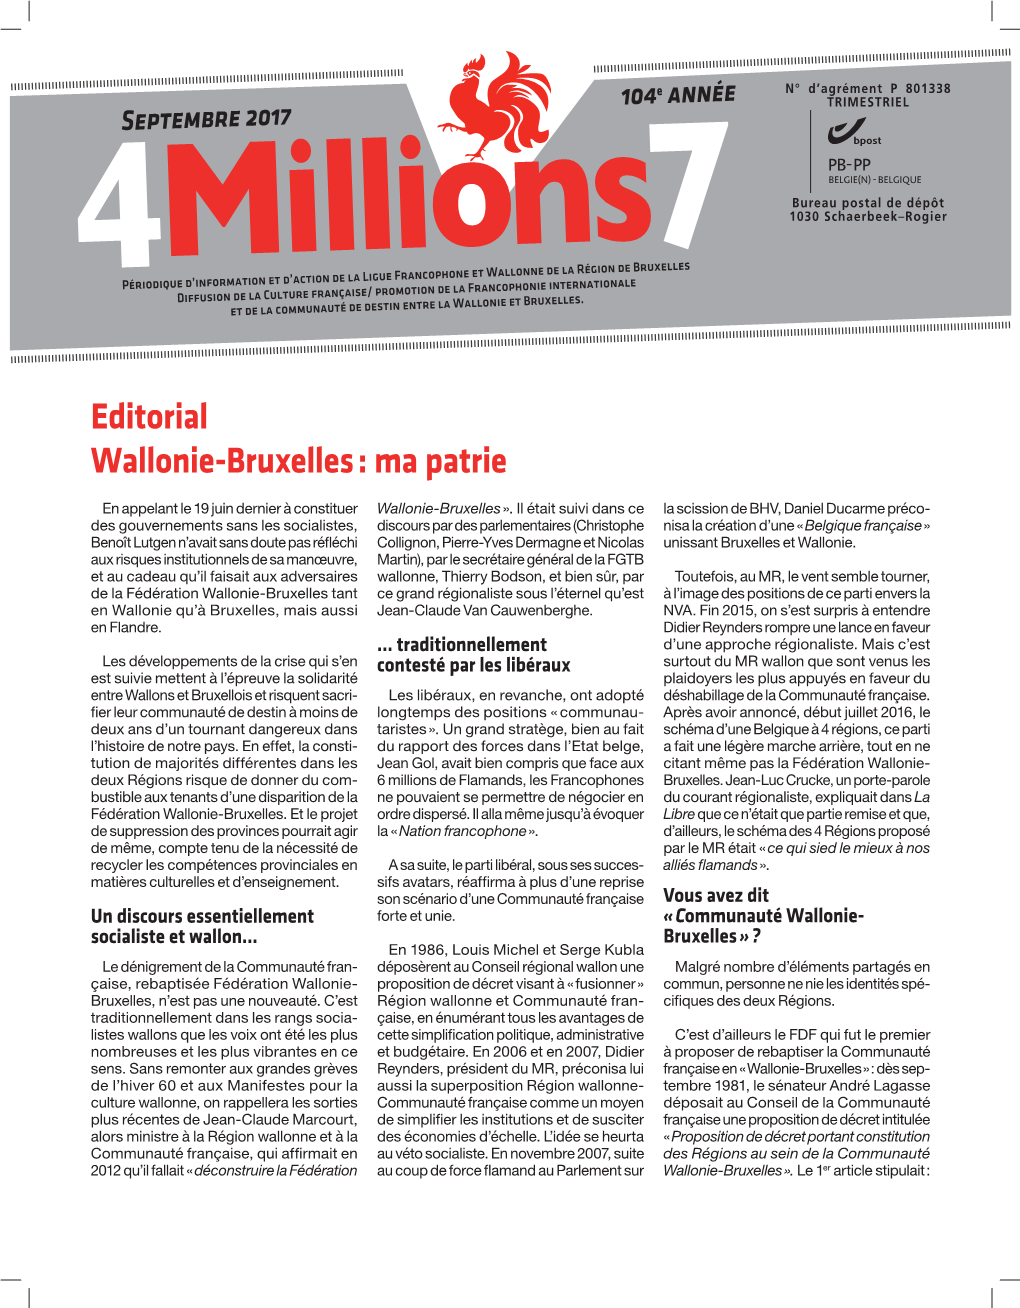 Editorial Wallonie-Bruxelles : Ma Patrie